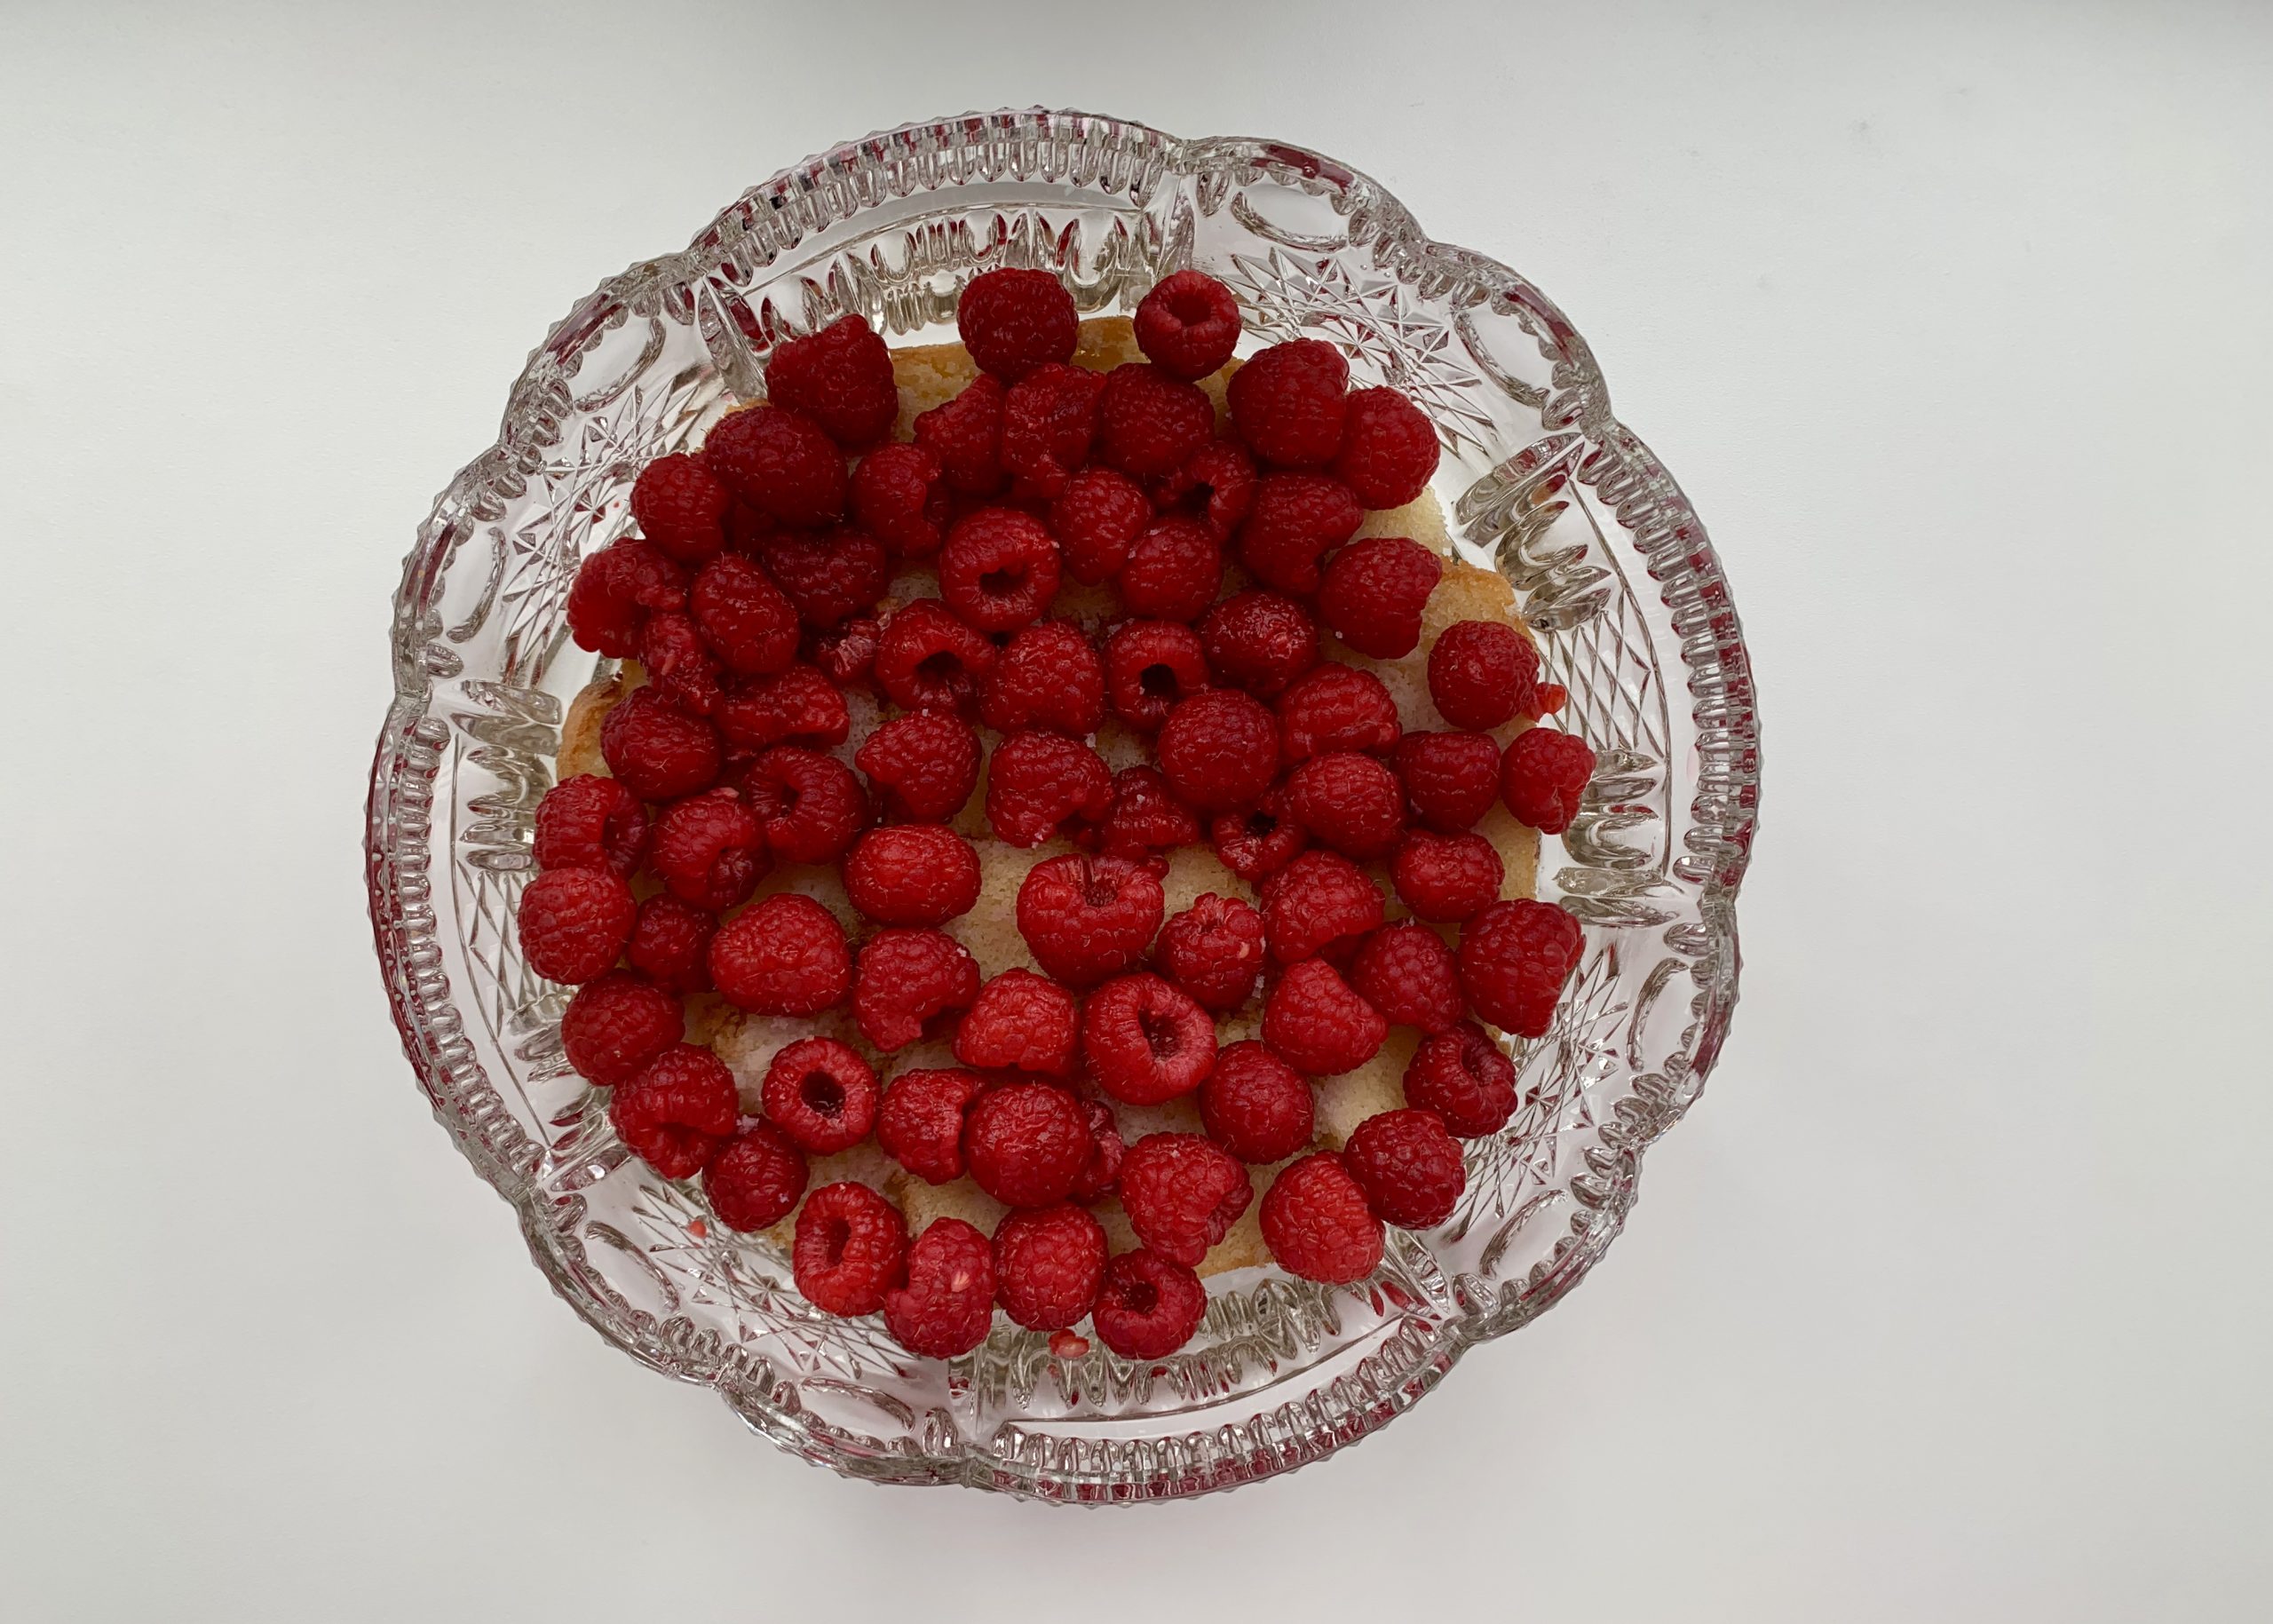 Gluten free sponge with raspberries in a glass bowl